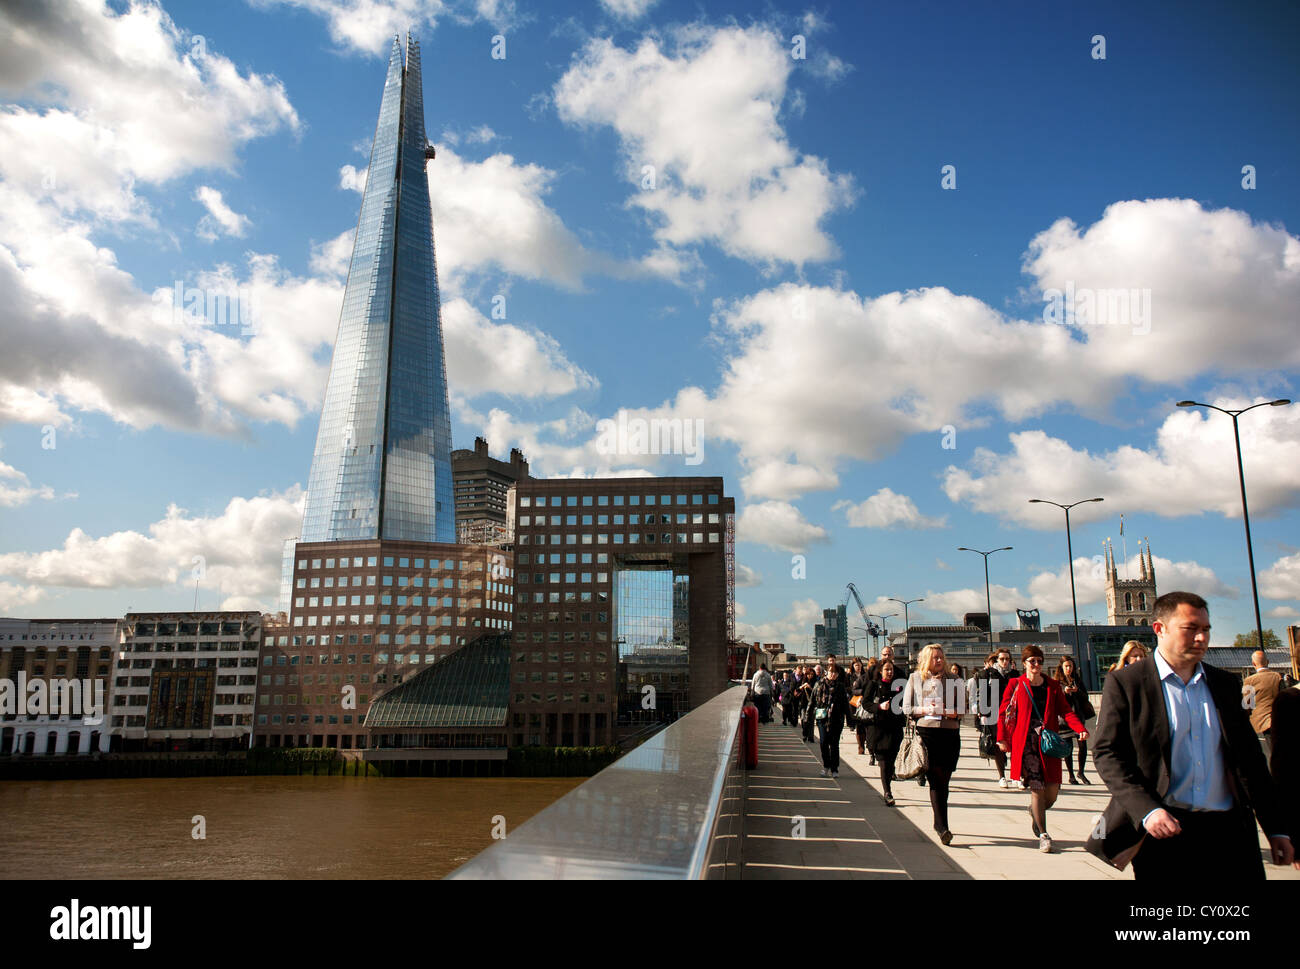 England. London. The Shard building and crowds crossing London Bridge. Stock Photo